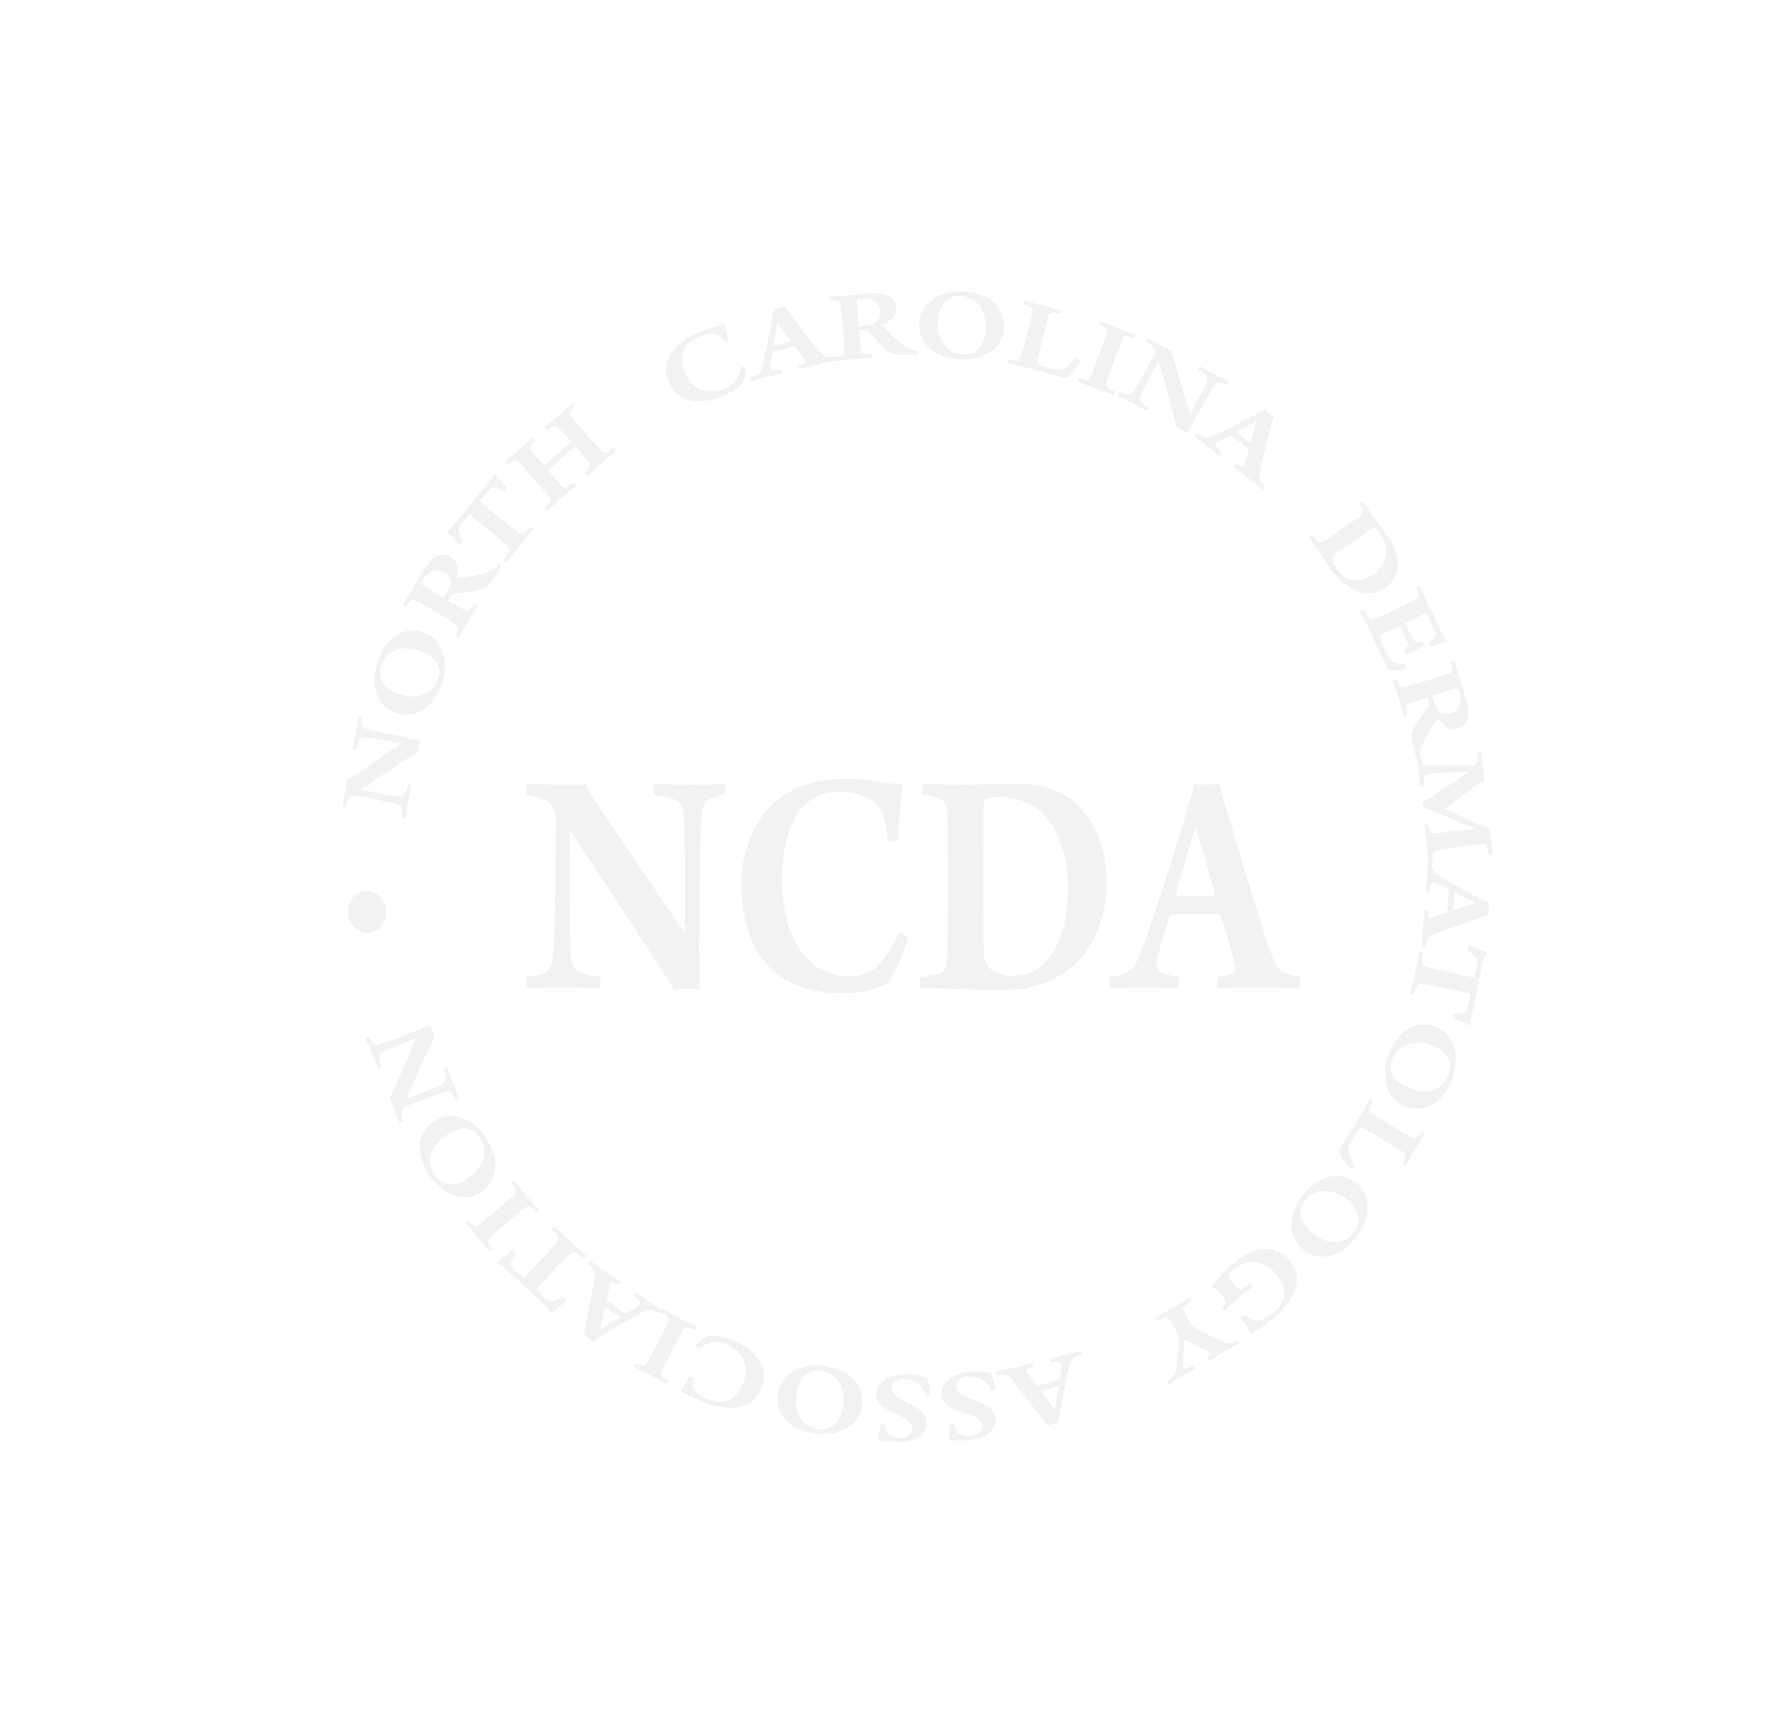 North Carolina Dermatology Association